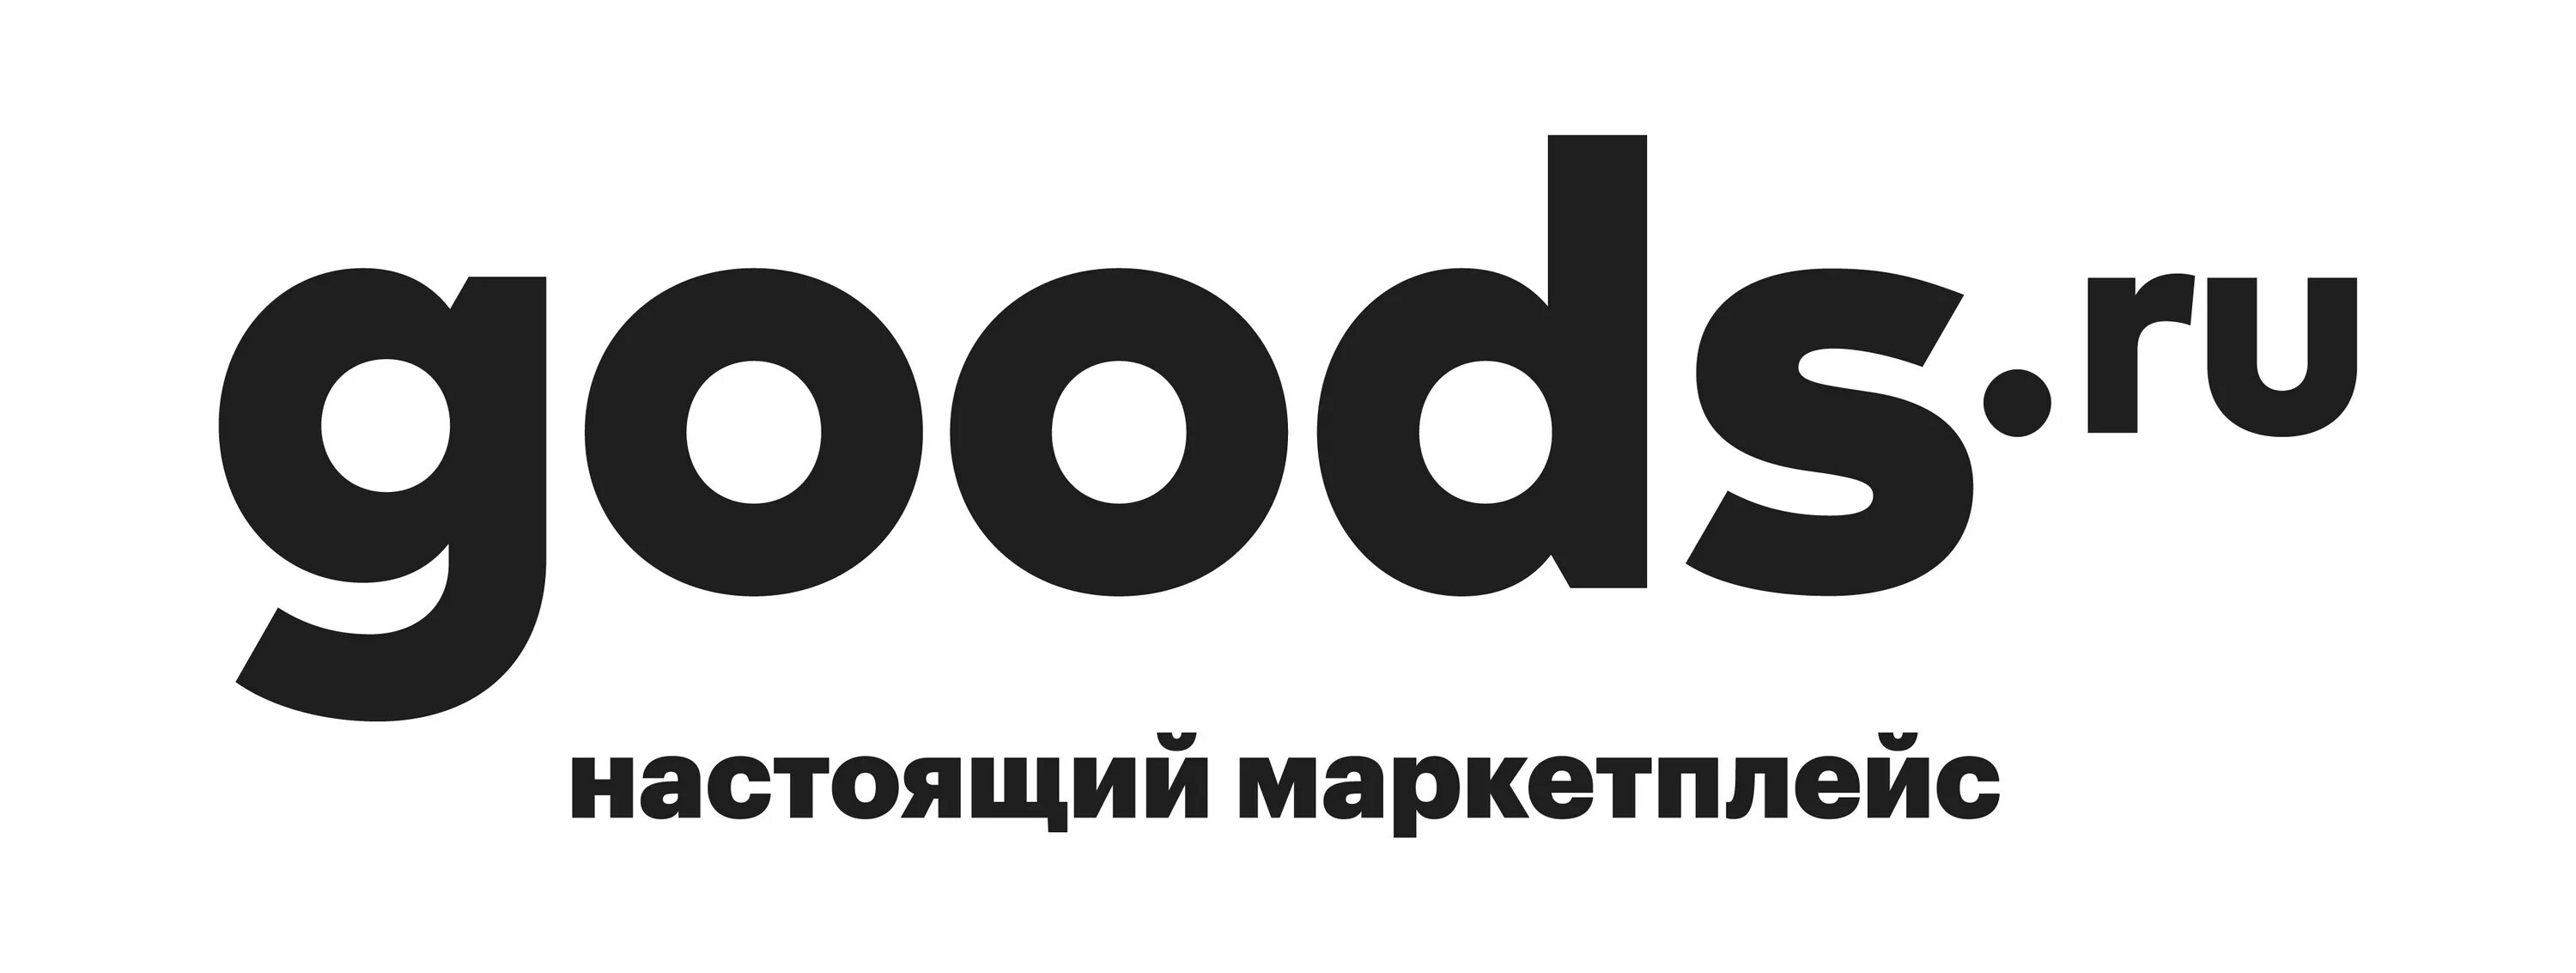 Логотип. Маркетплейс goods. Goods logo. Goods.ru интернет магазин.